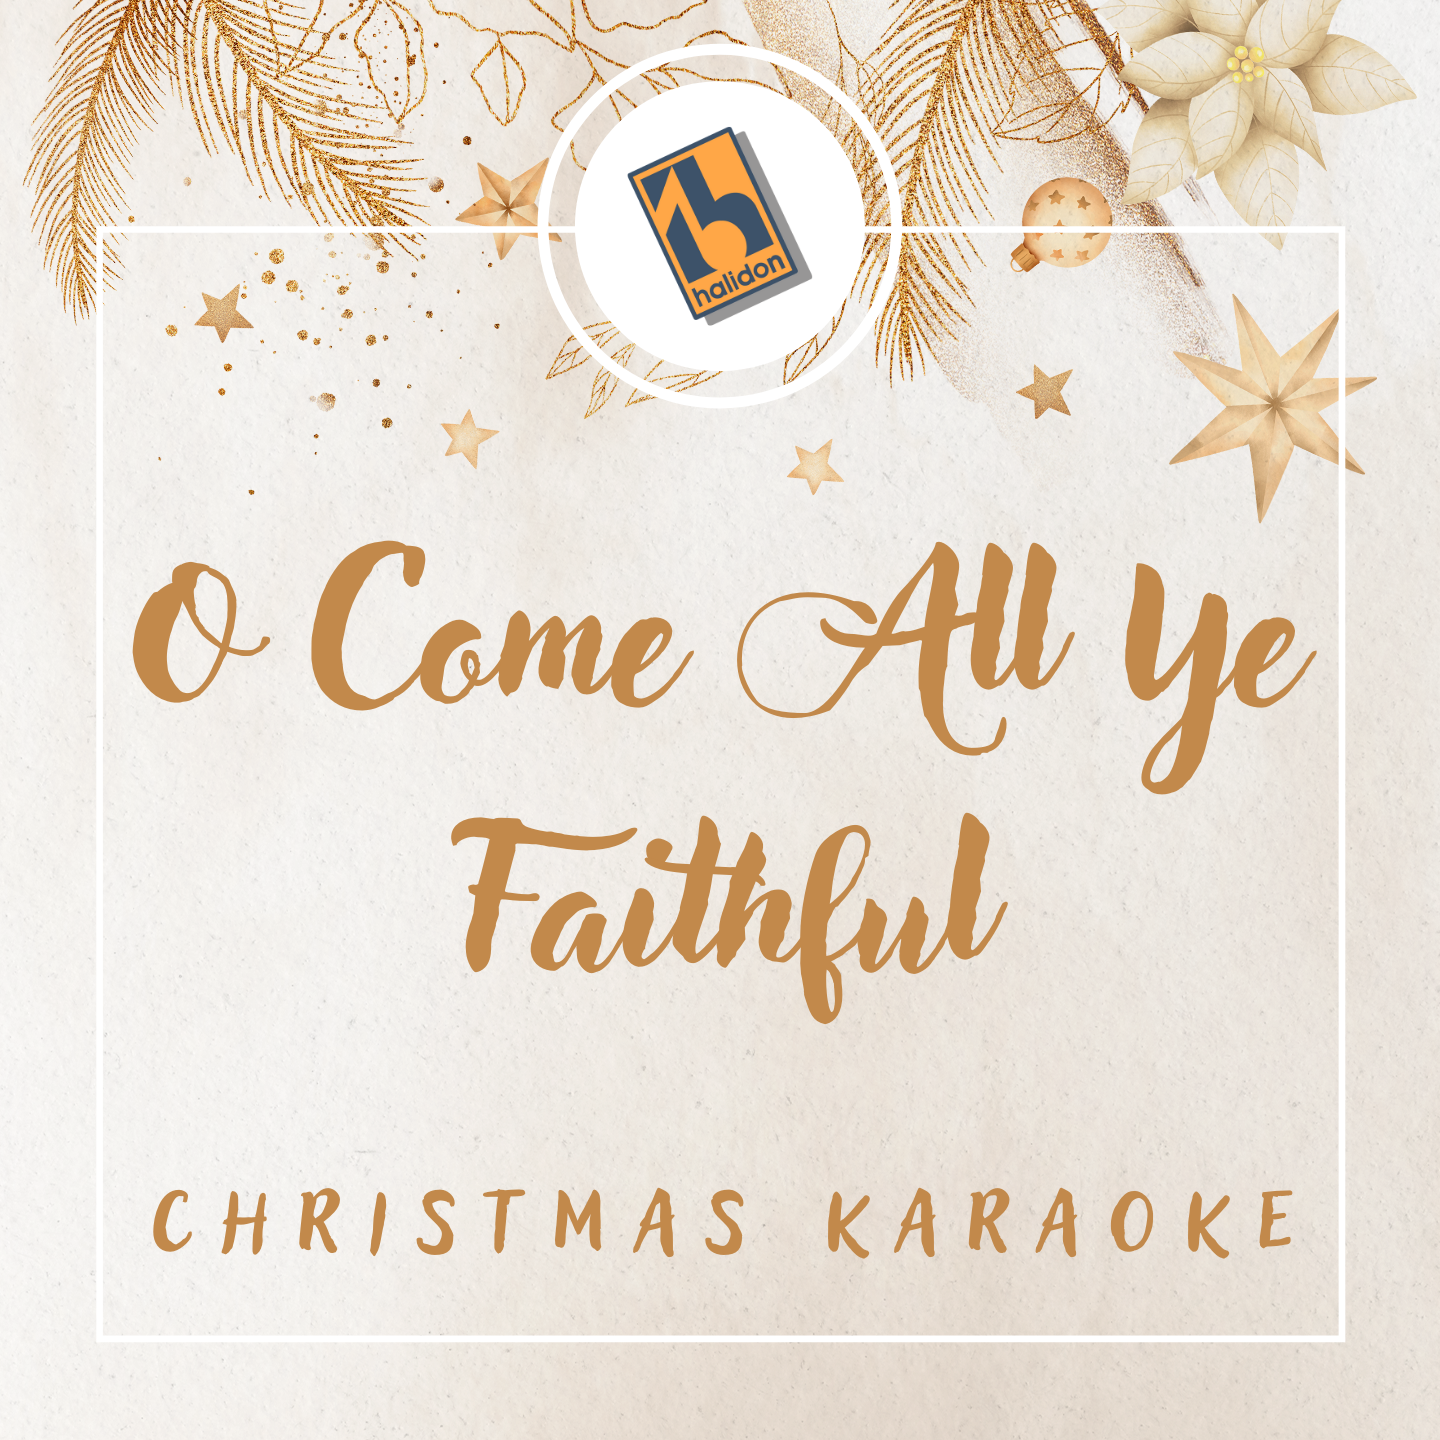 O Come All Ye Faithful (Karaoke)